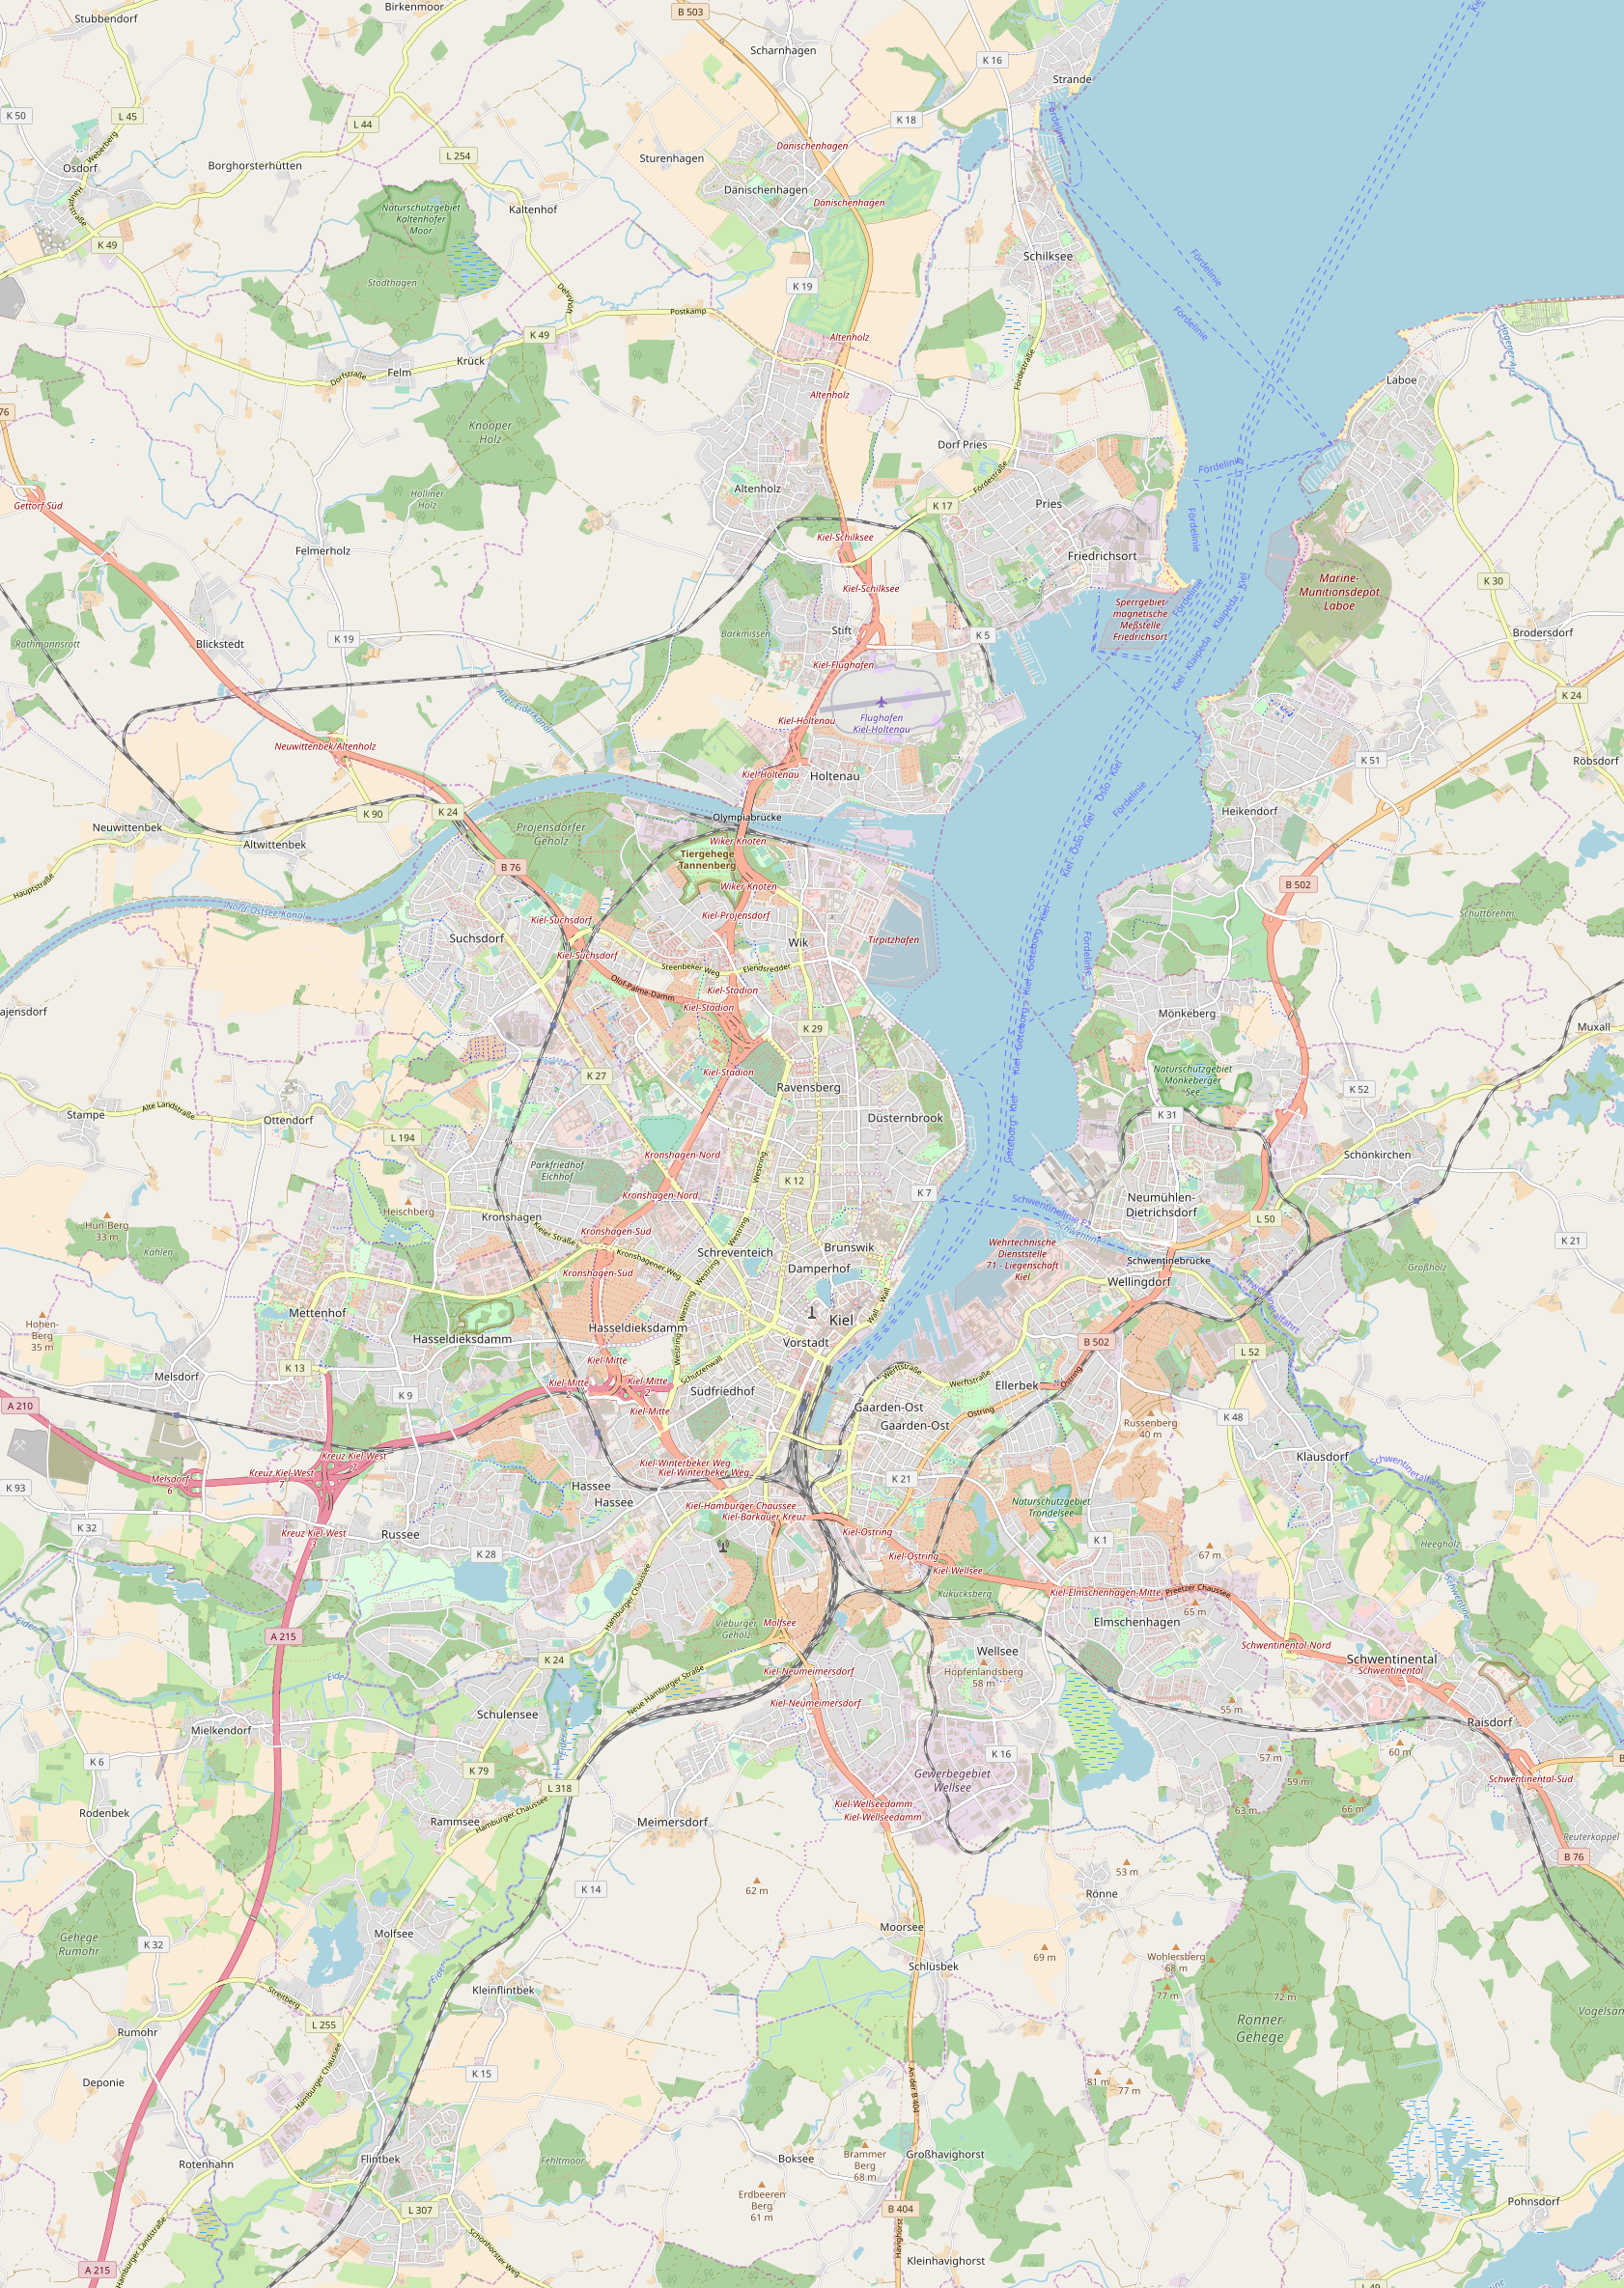 karte kiel File Kiel Map Png Wikimedia Commons karte kiel